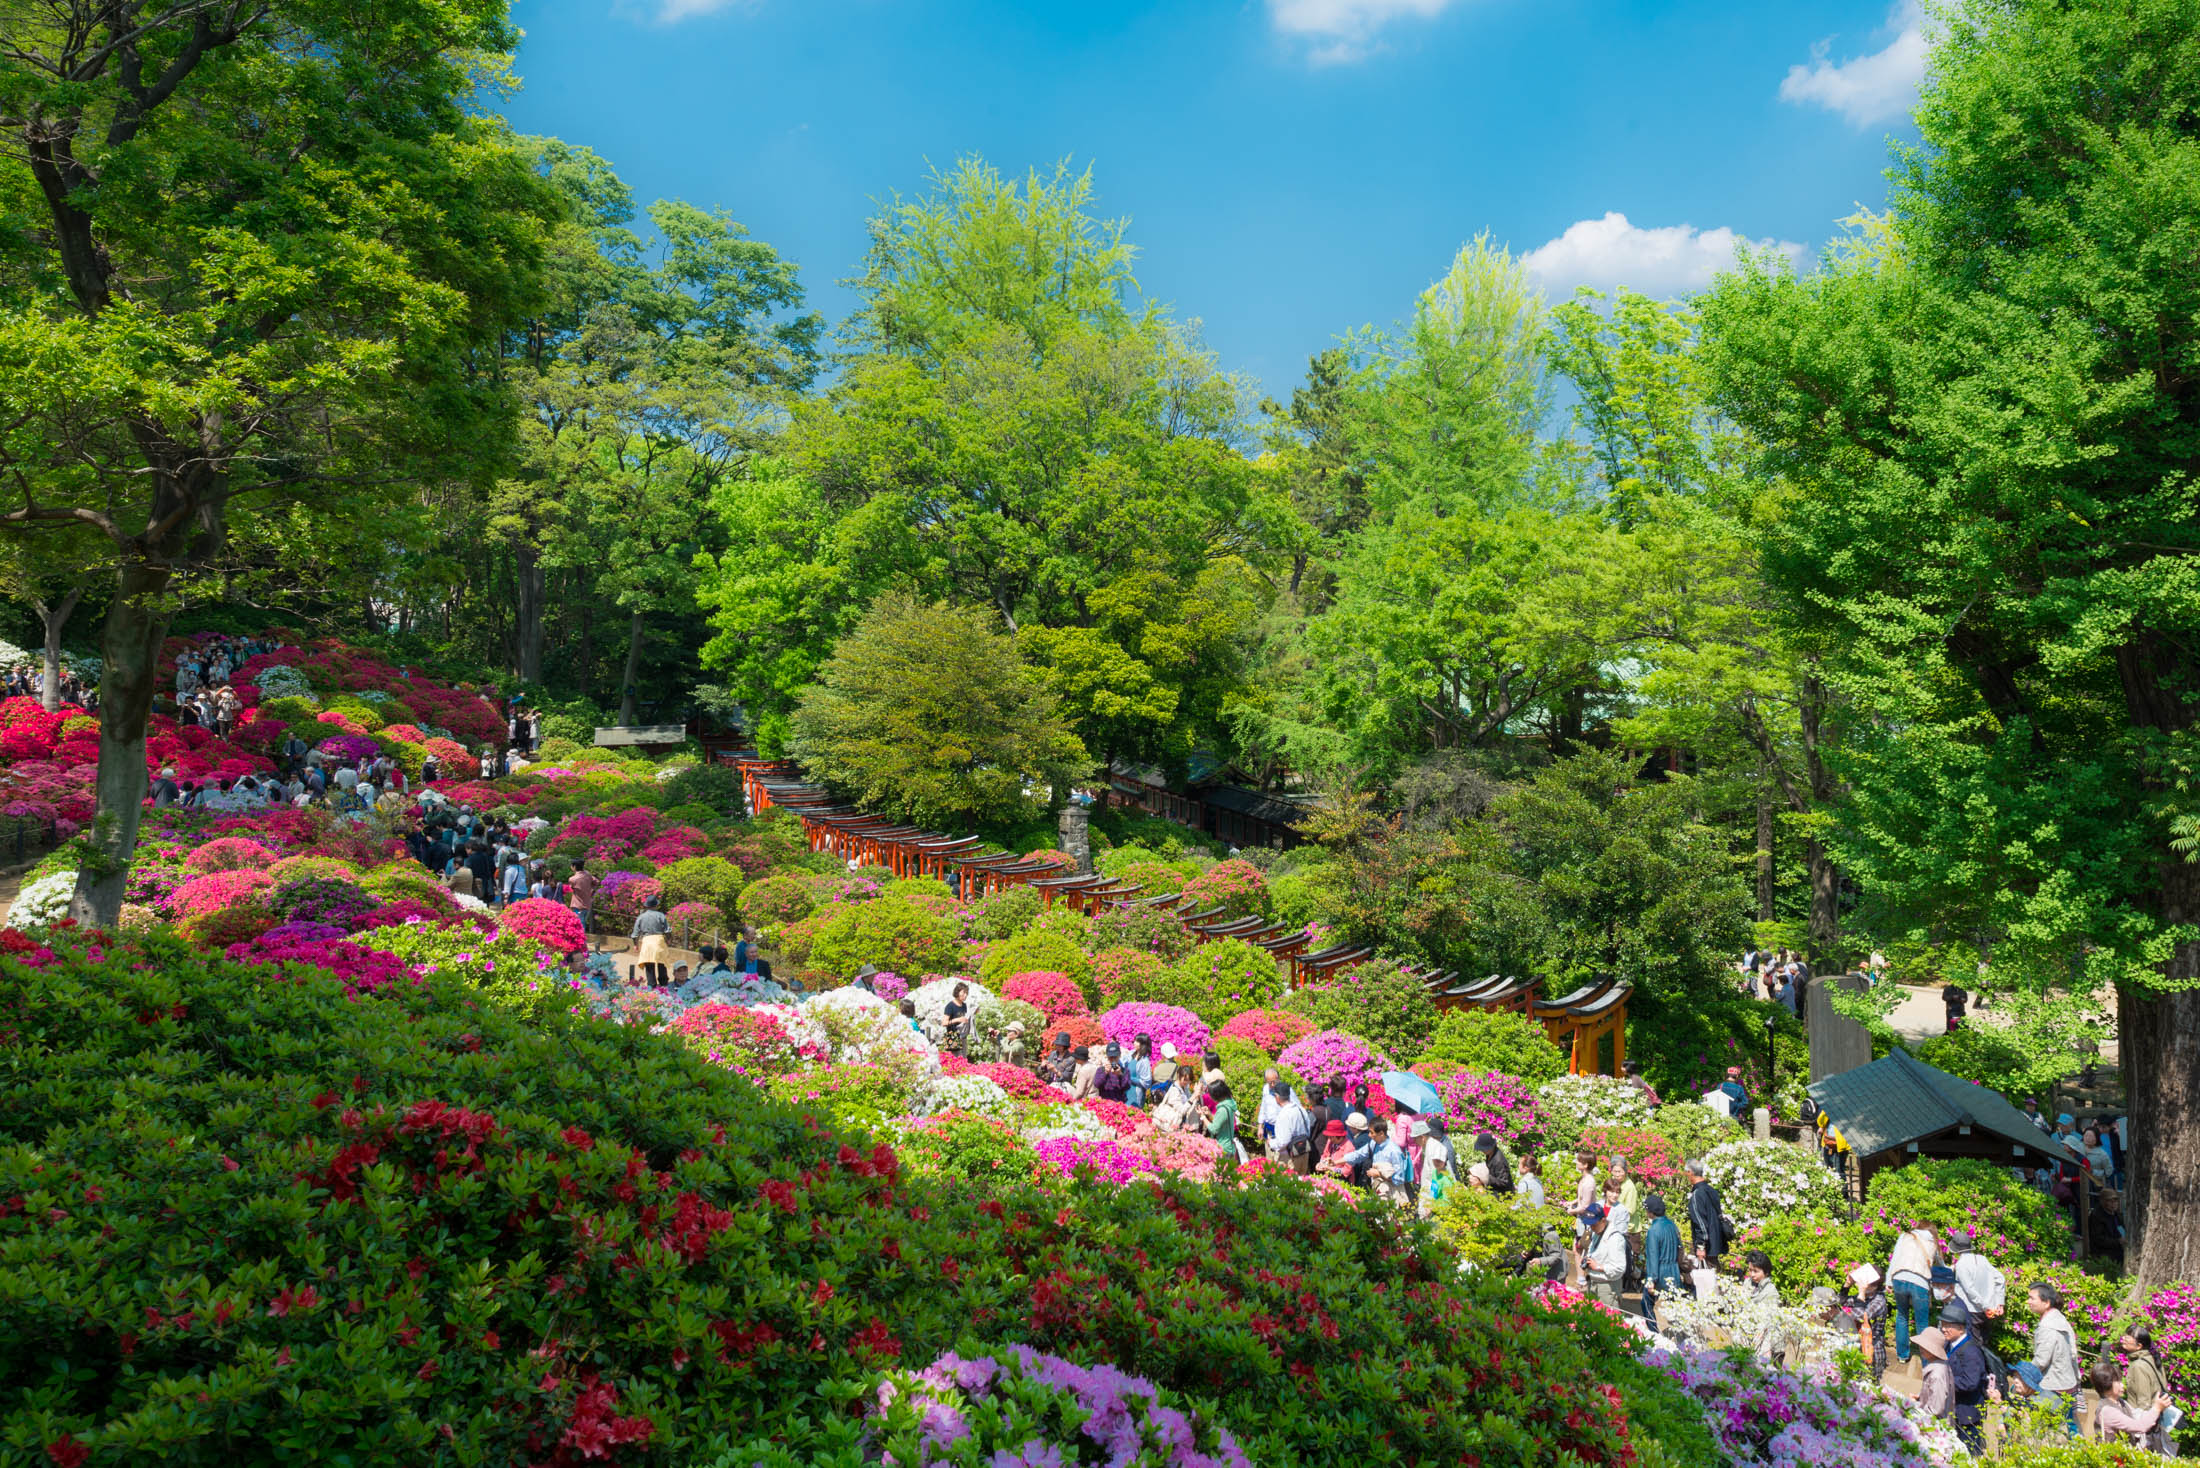 Serene Nezu Shrine with lush azalea gardens, a vibrant Japanese oasis of colorful flowers.